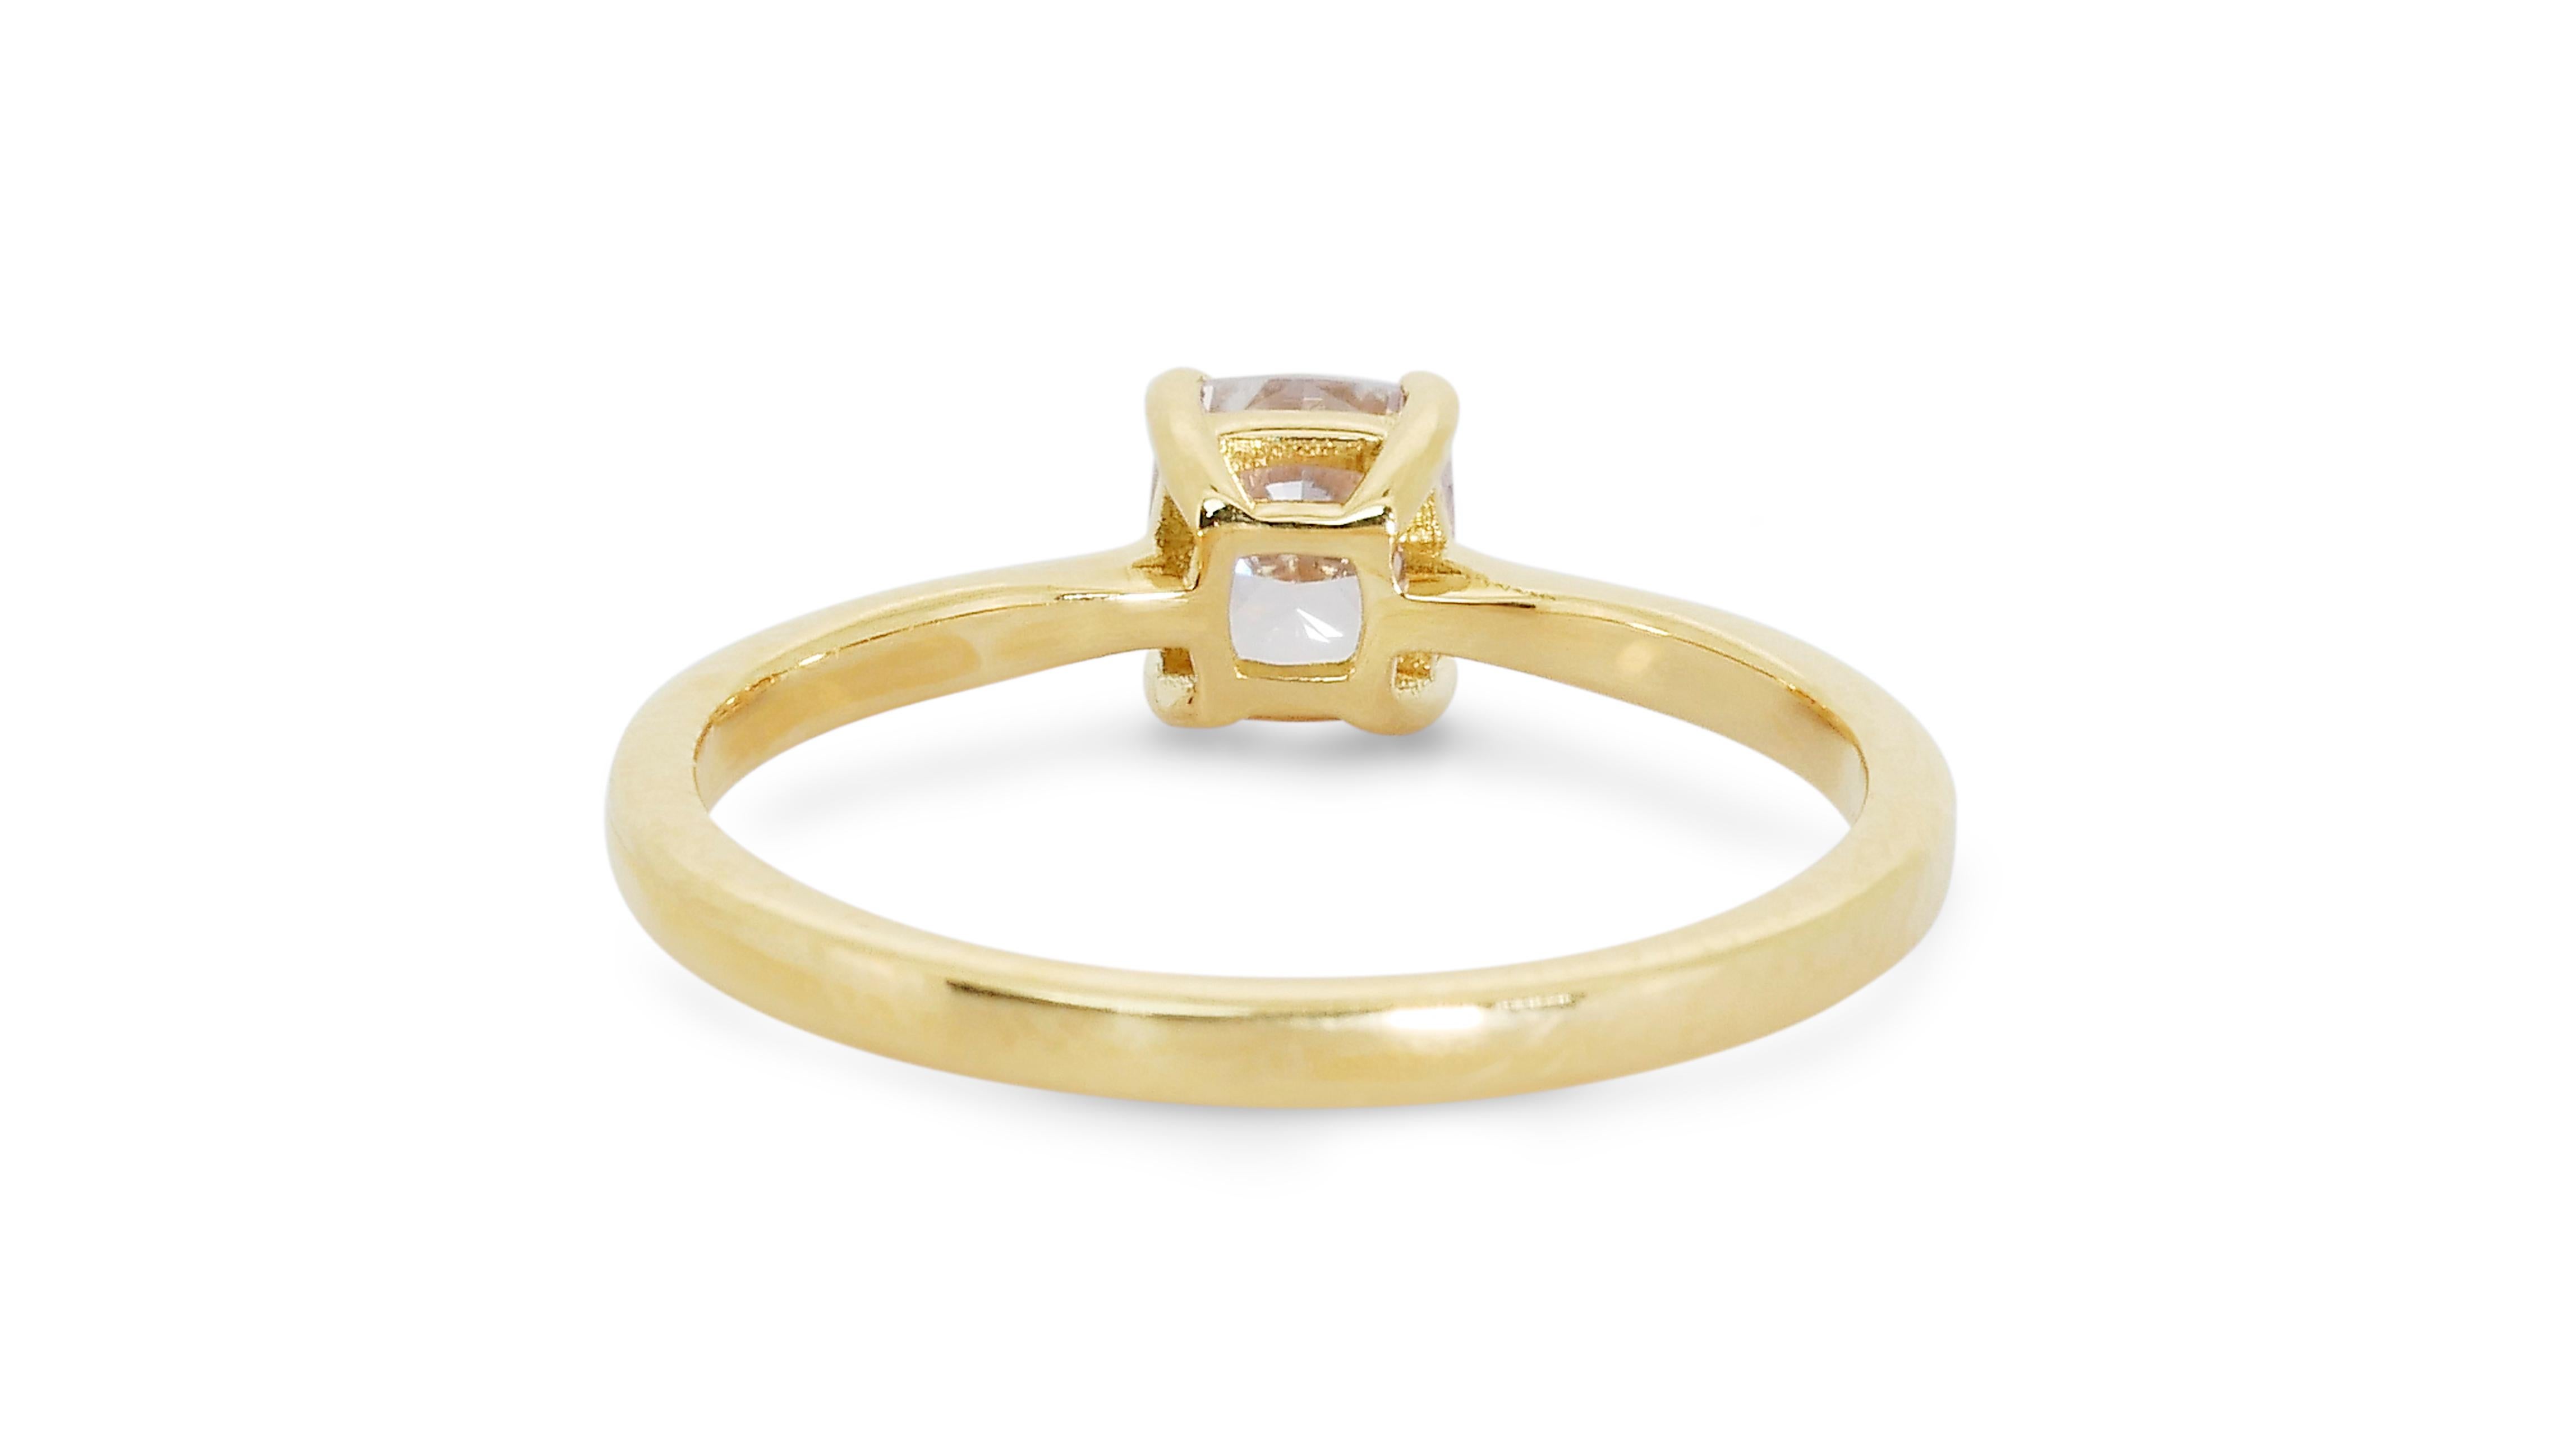 Marvelous 18k Yellow Gold Solitaire Ring w/ 0.7 Carat Natural Diamonds IGI Cert For Sale 2